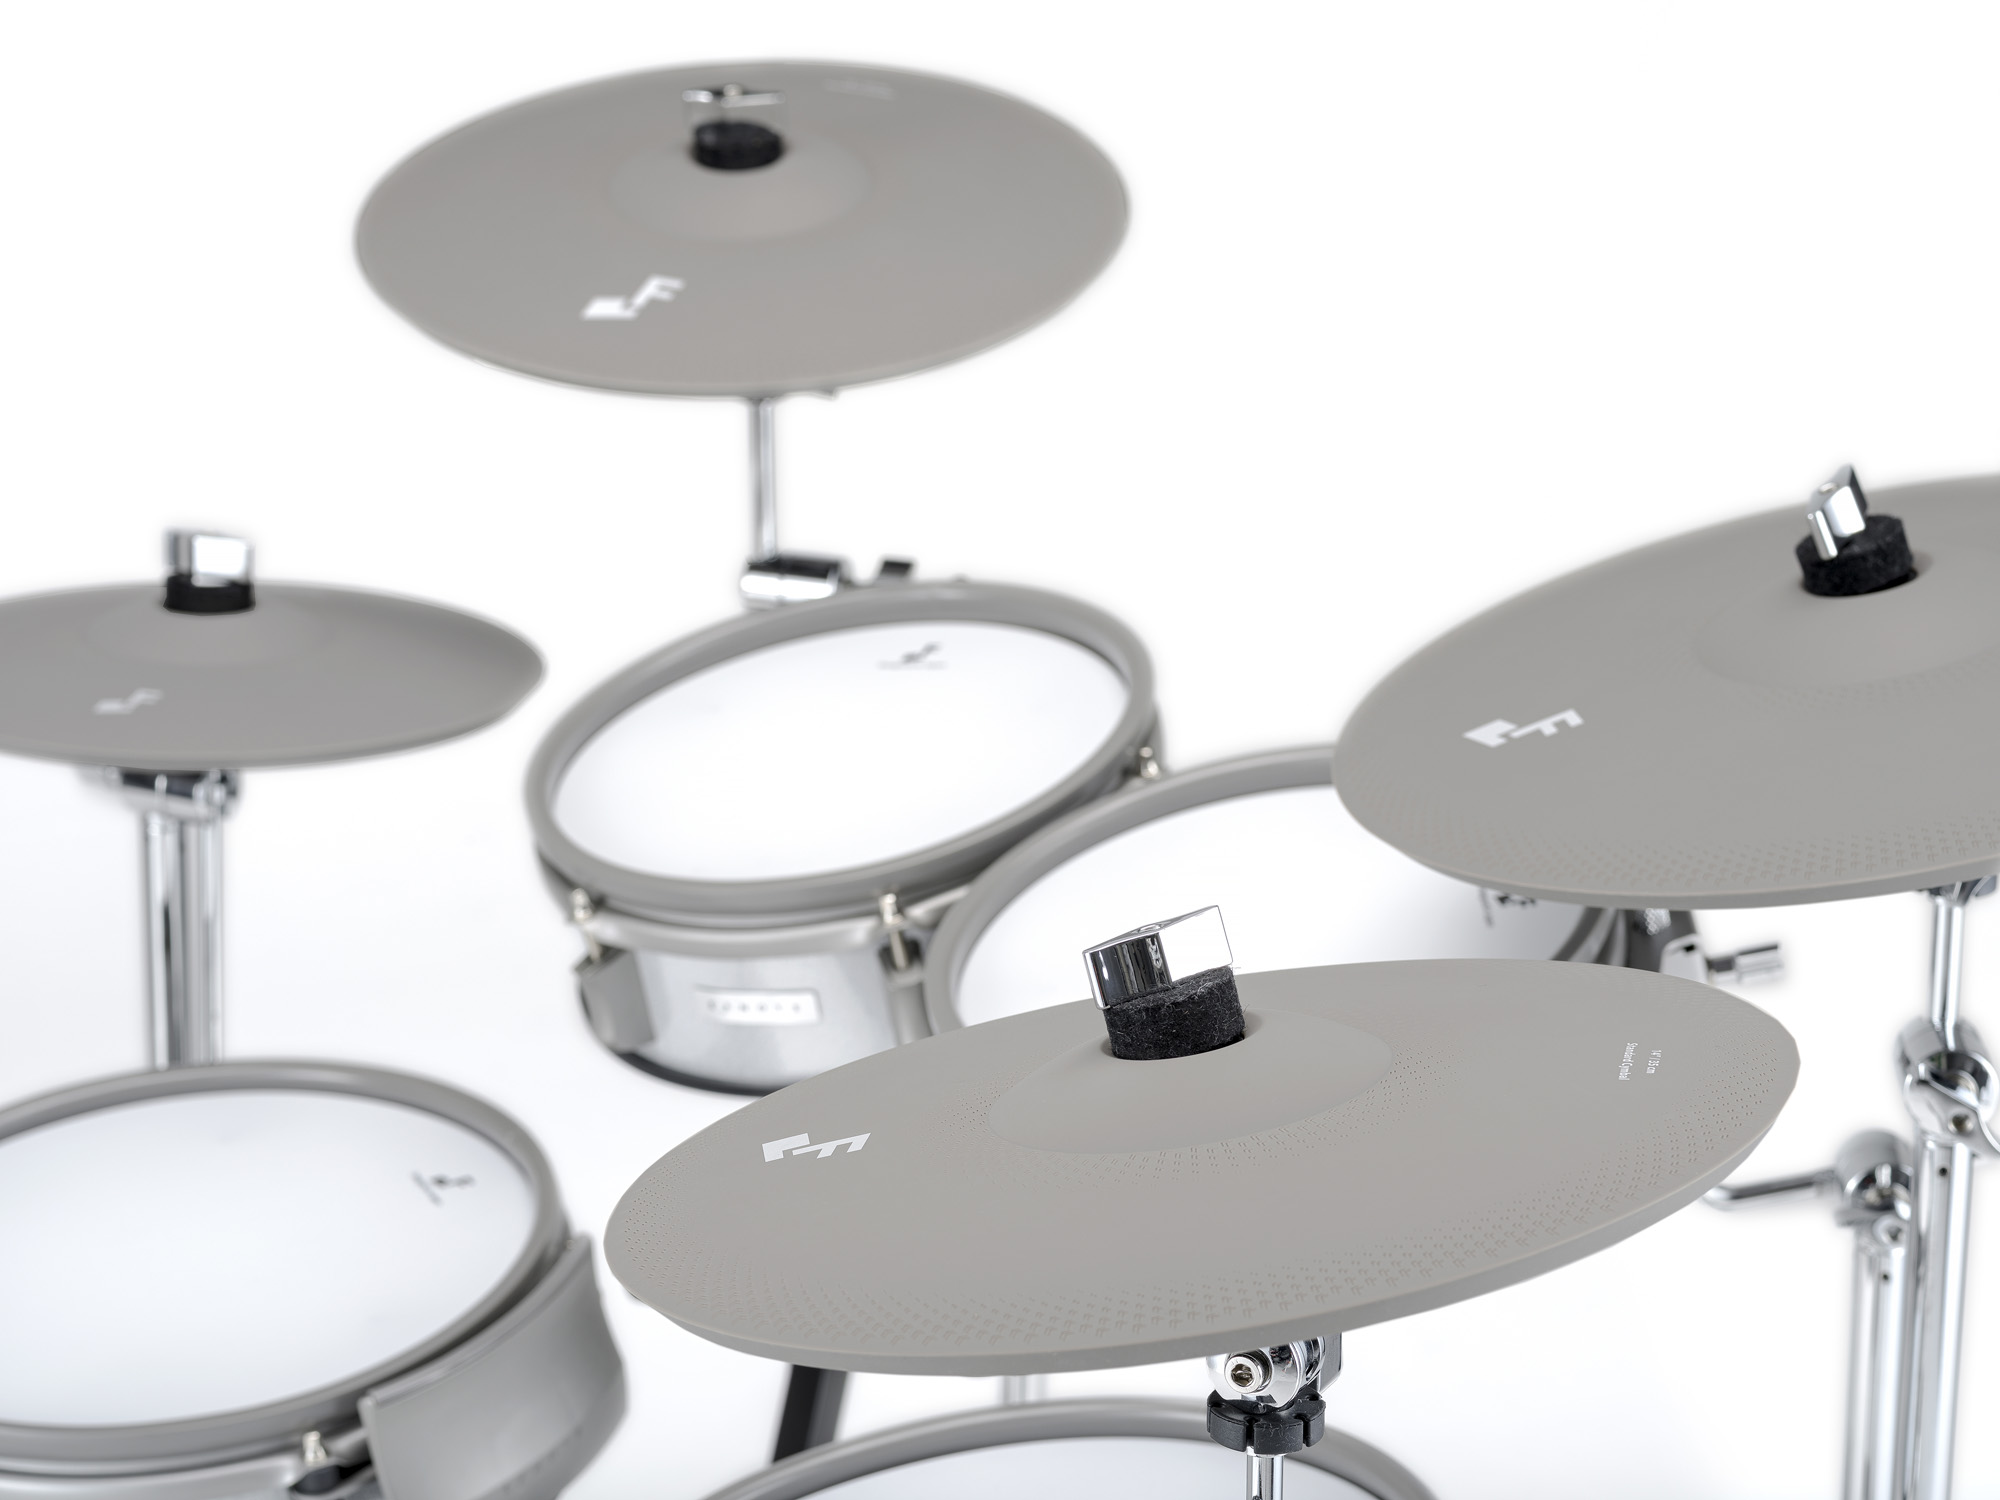 Efnote Efd3 Drum Kit - Komplett E-Drum Set - Variation 1